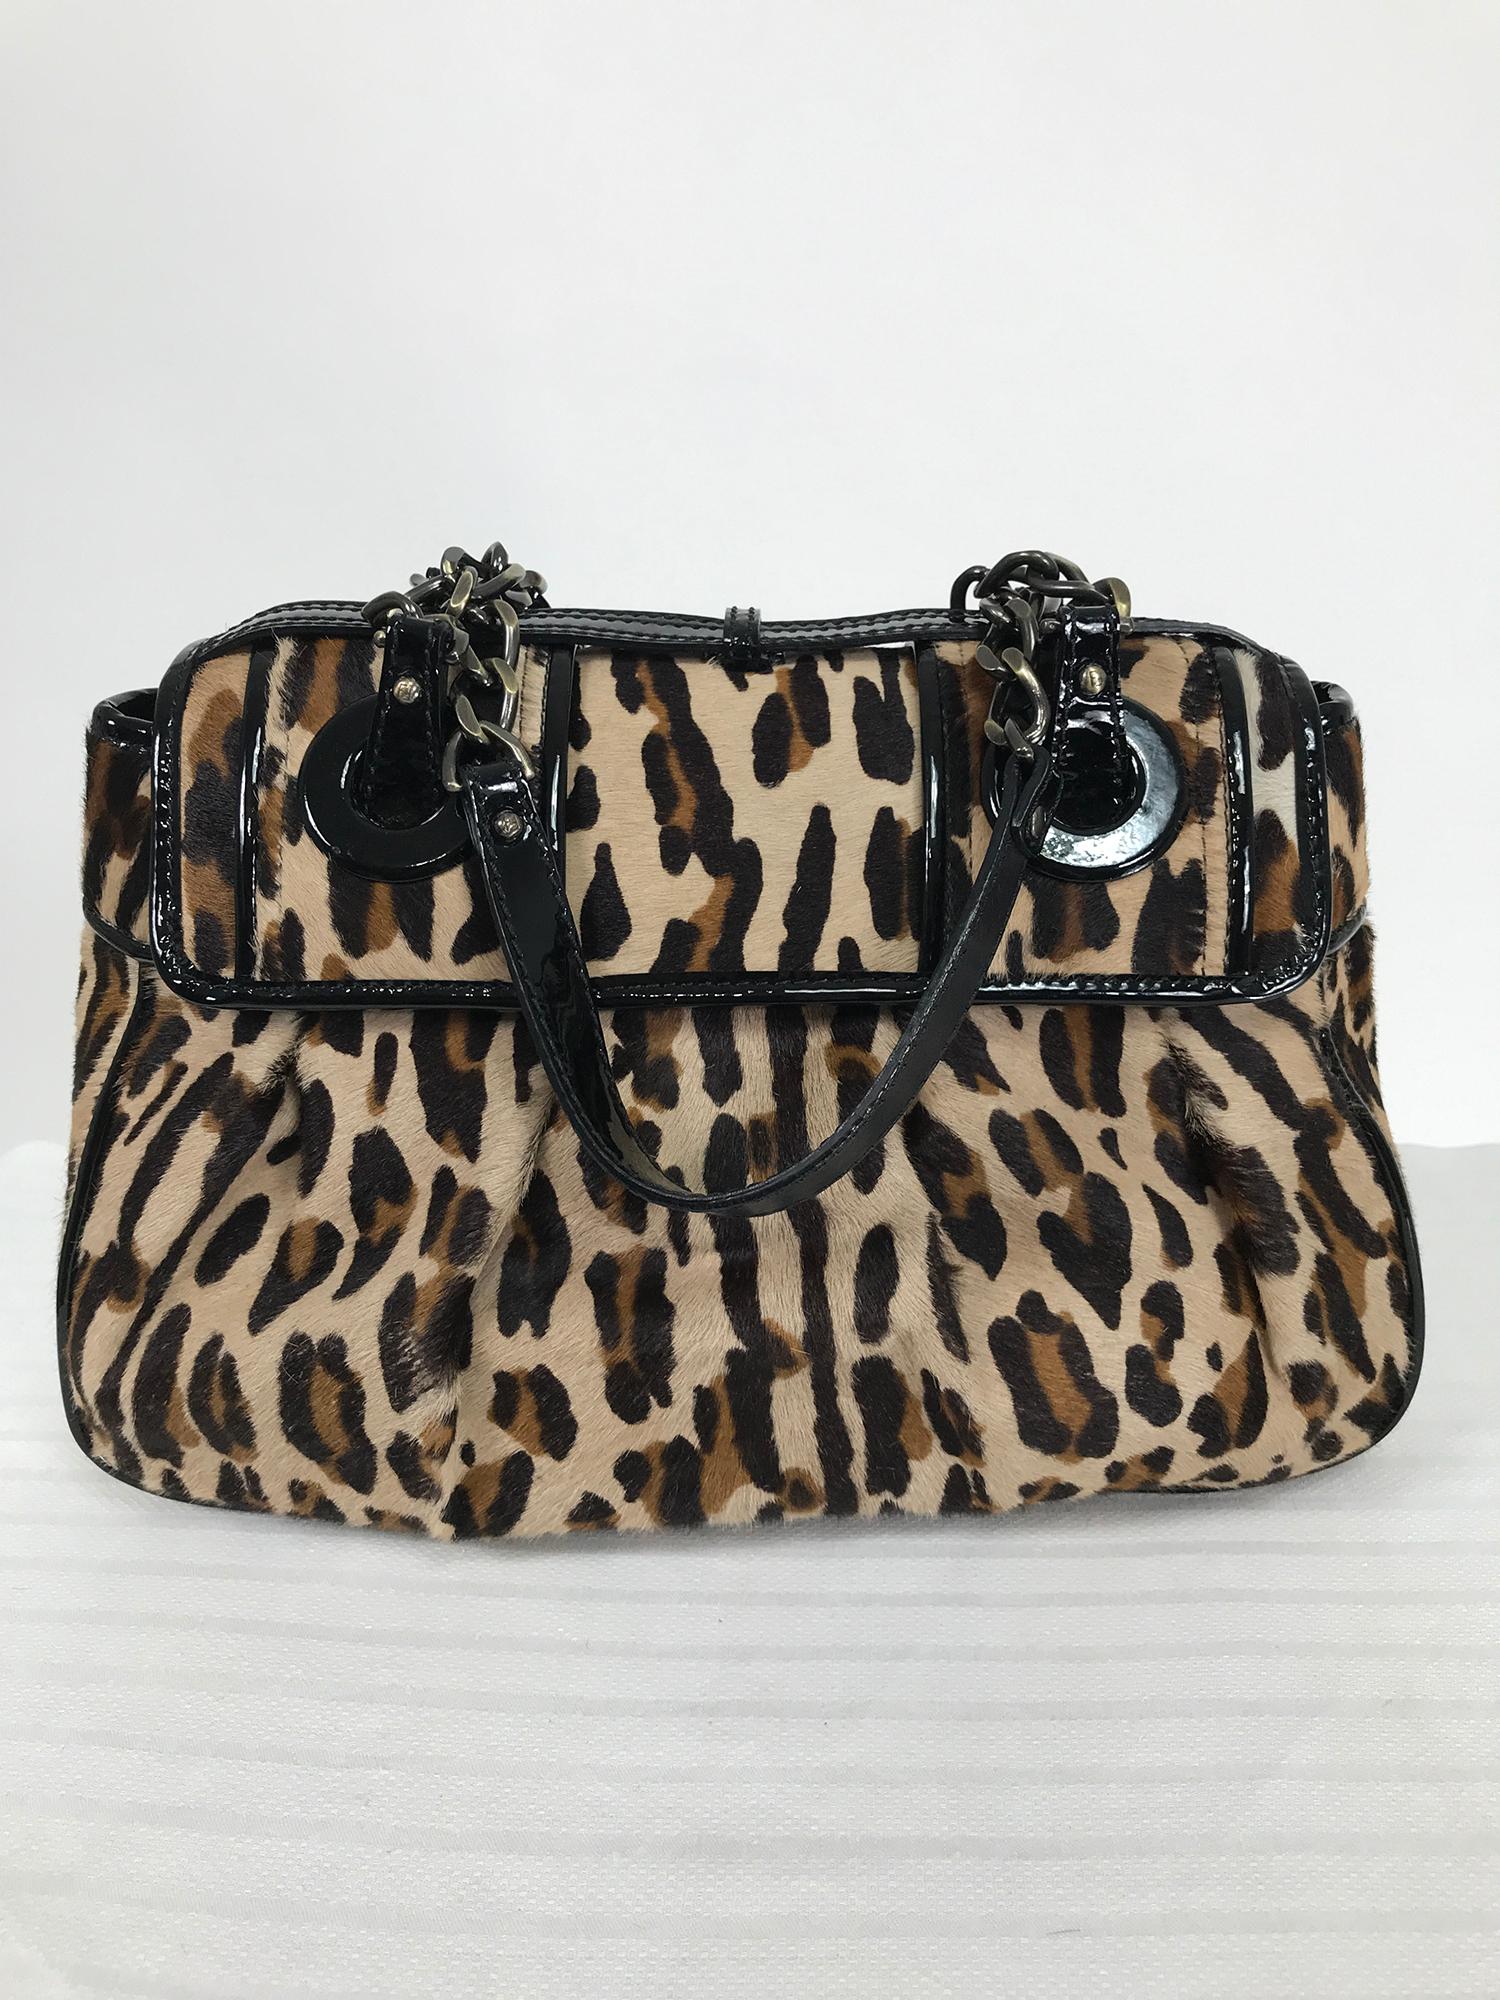 Women's or Men's Fendi Leopard Print Calf Hair and Black Patent Leather B Bag 